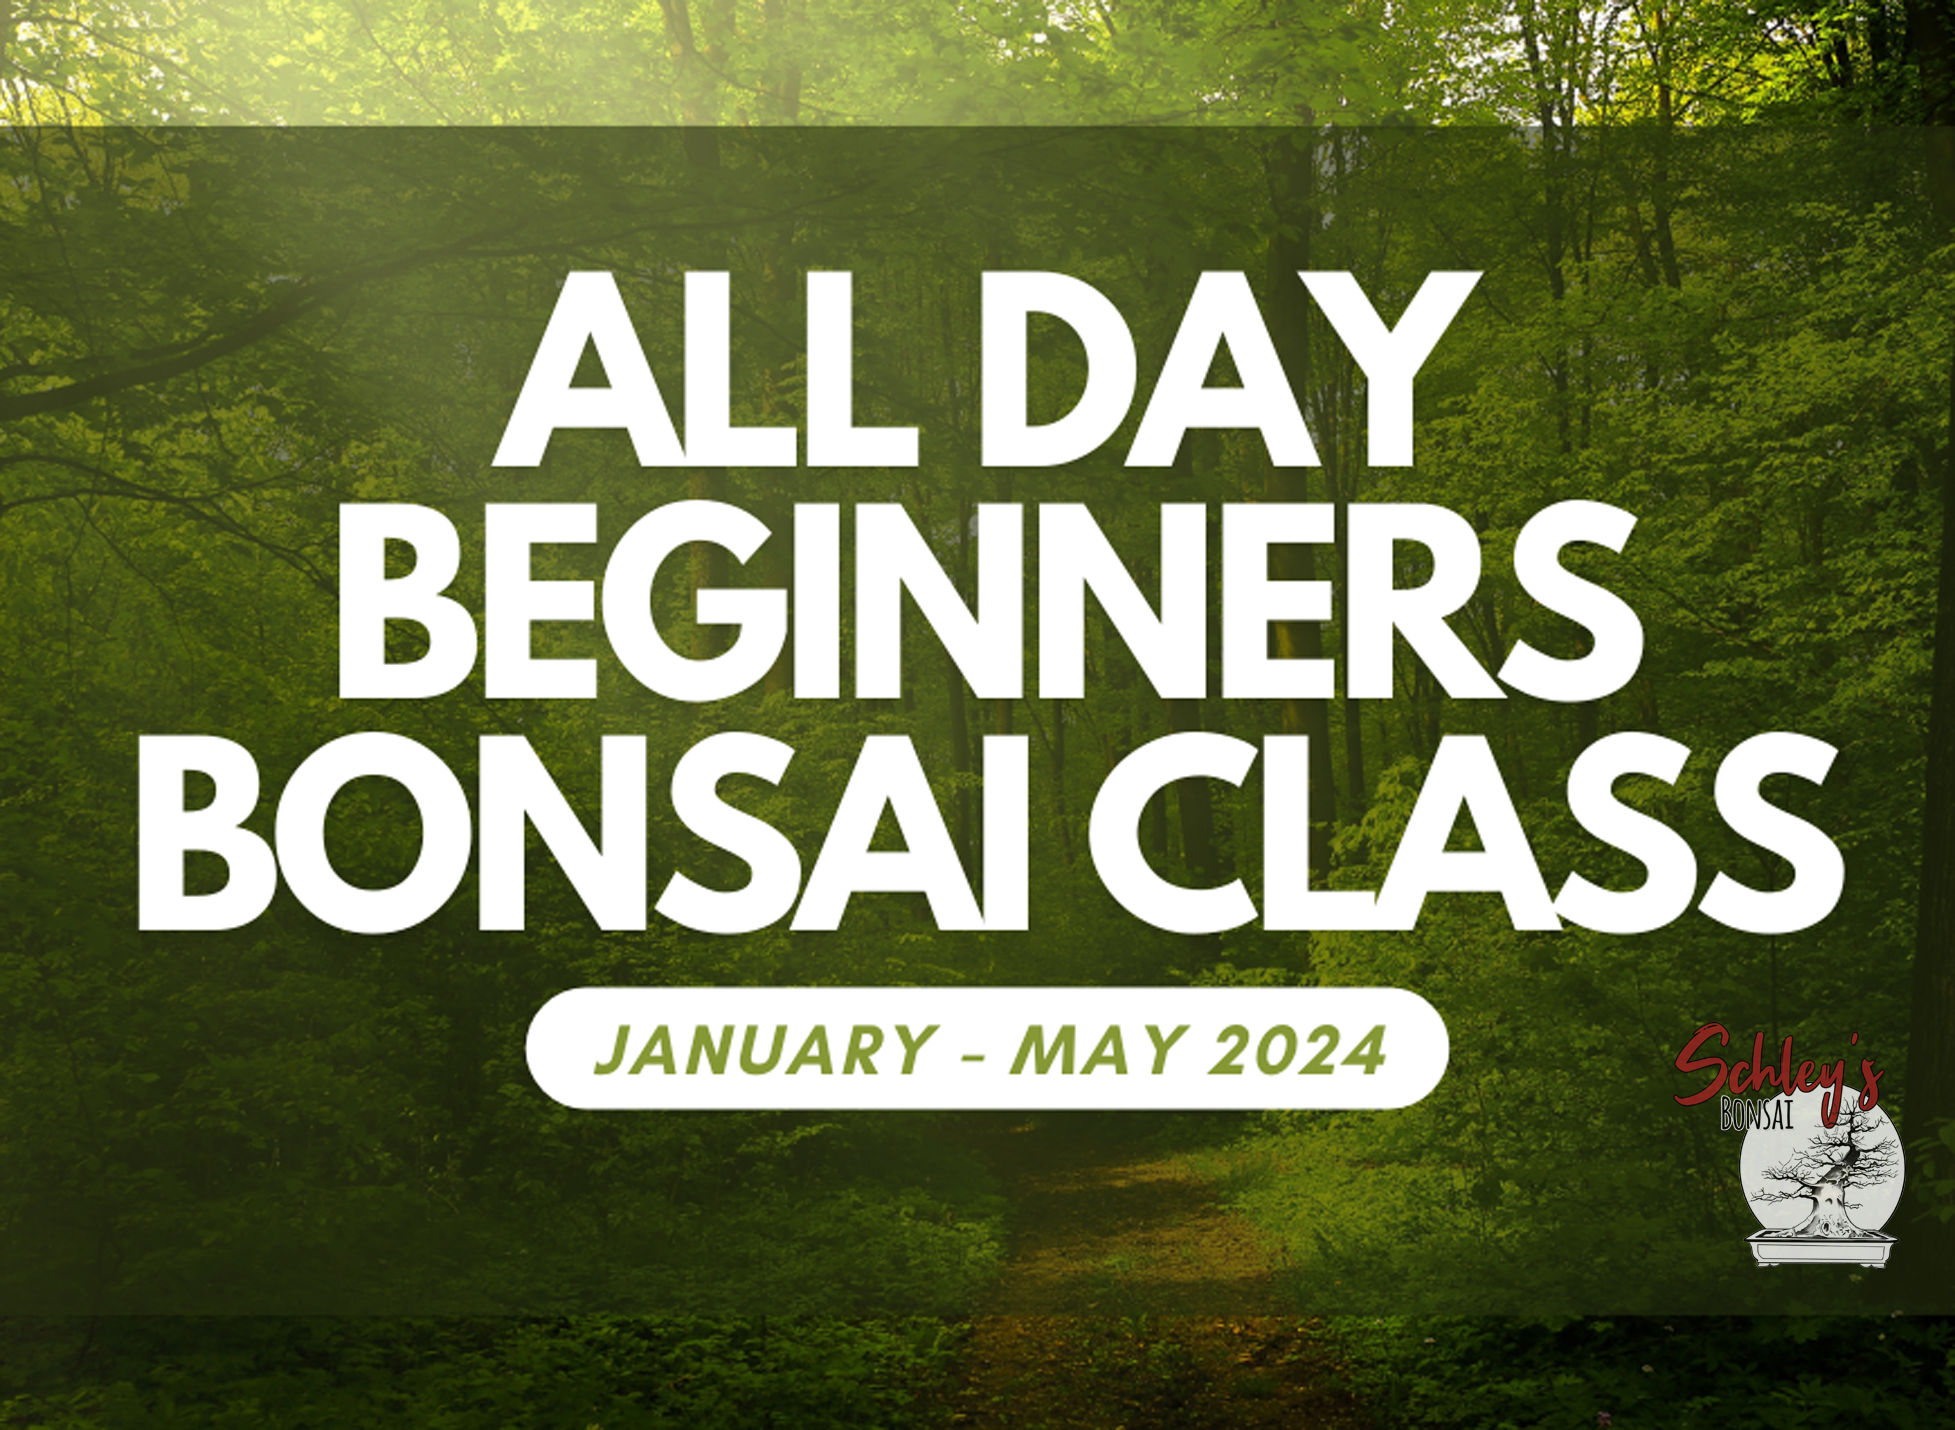 Bonsai Classes